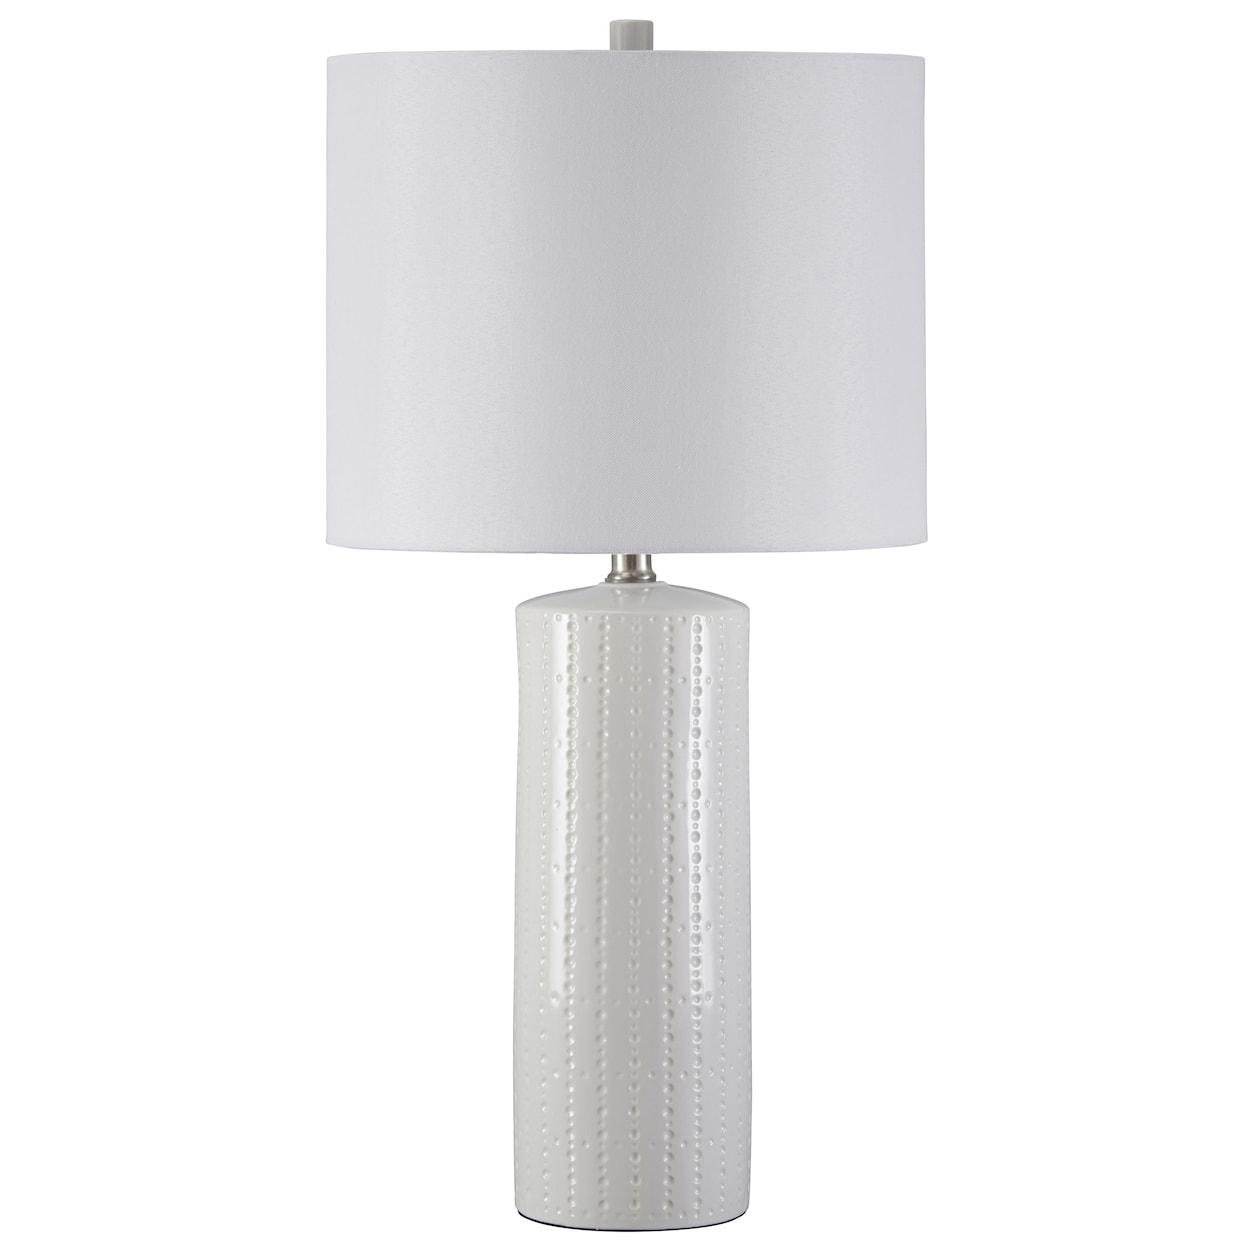 Ashley Furniture Signature Design Lamps - Contemporary Set of 2 Steuben Ceramic Table Lamps